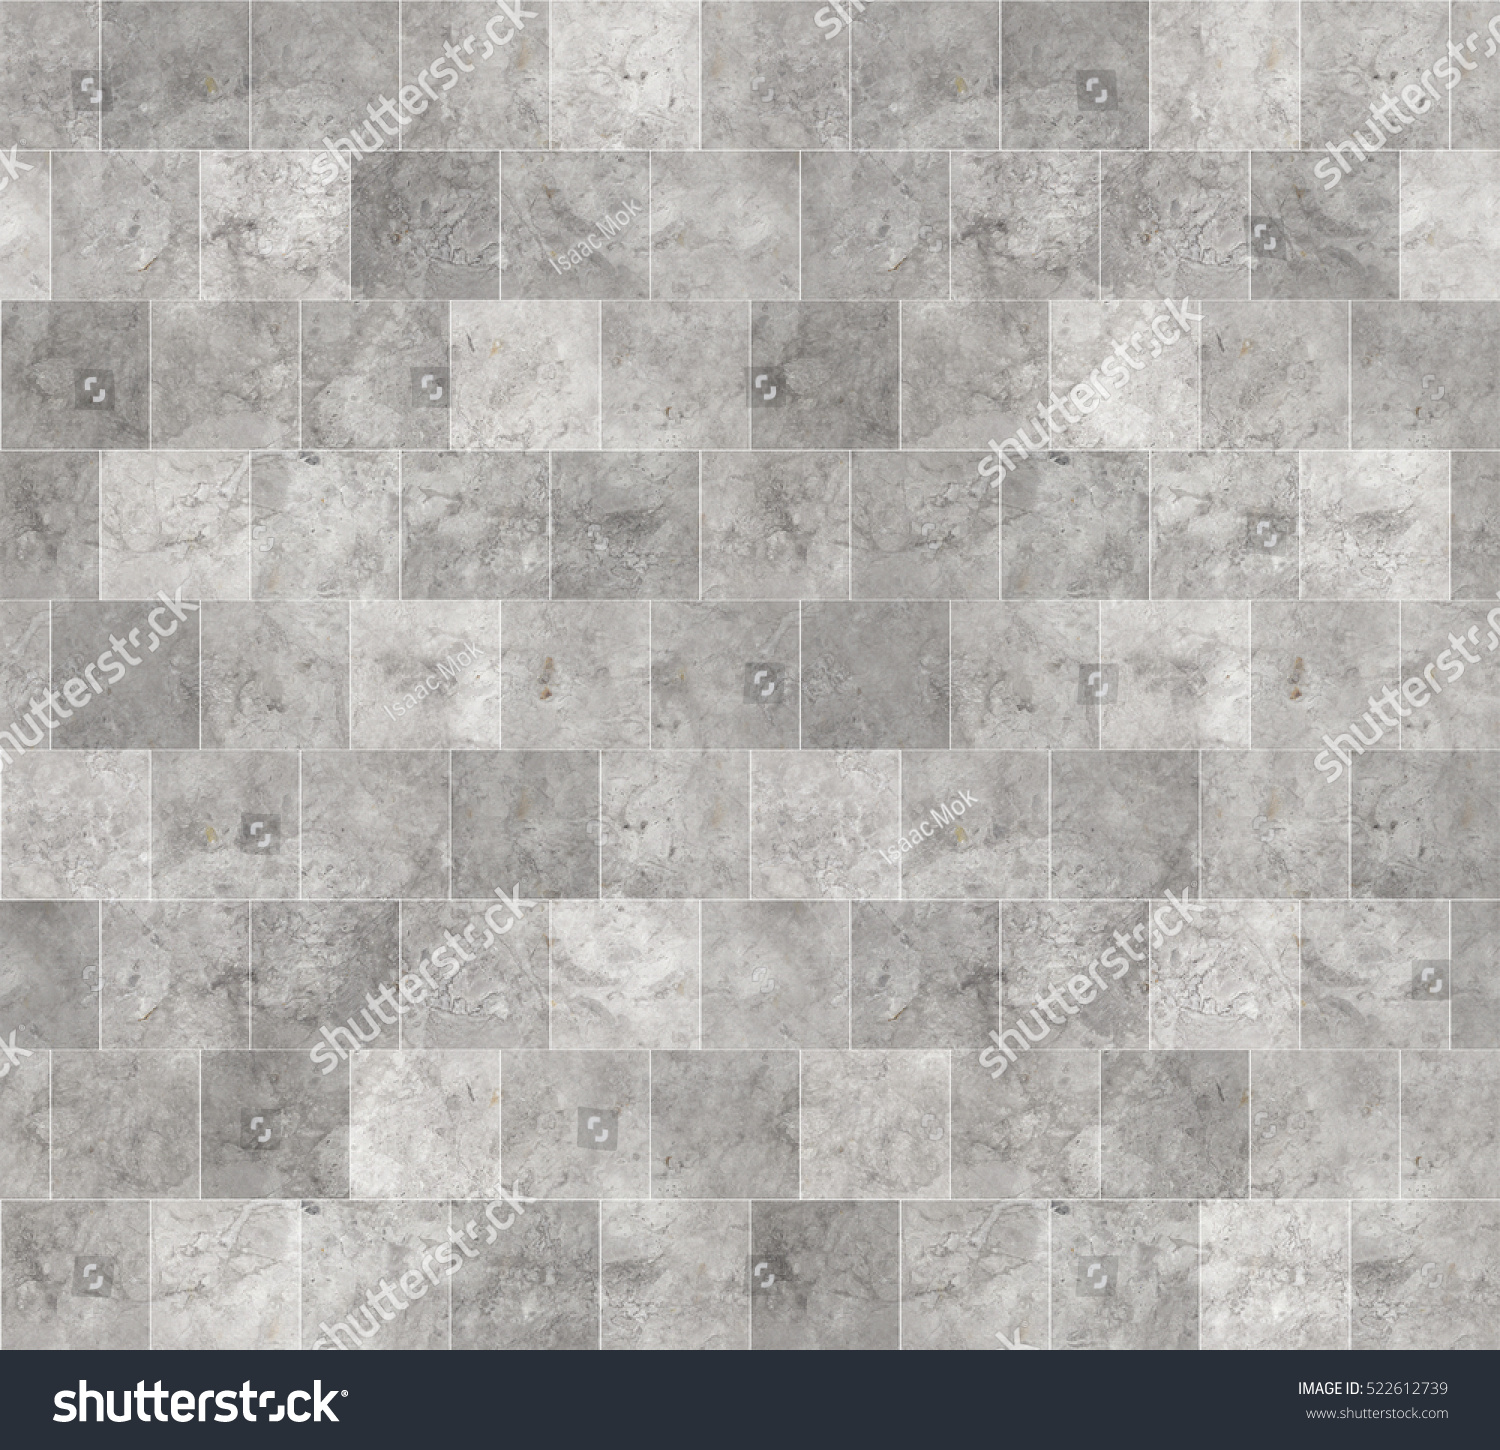 Seamless Grey Marble Stone Tile Texture With Royalty Free Stock Photo 522612739 Avopixcom